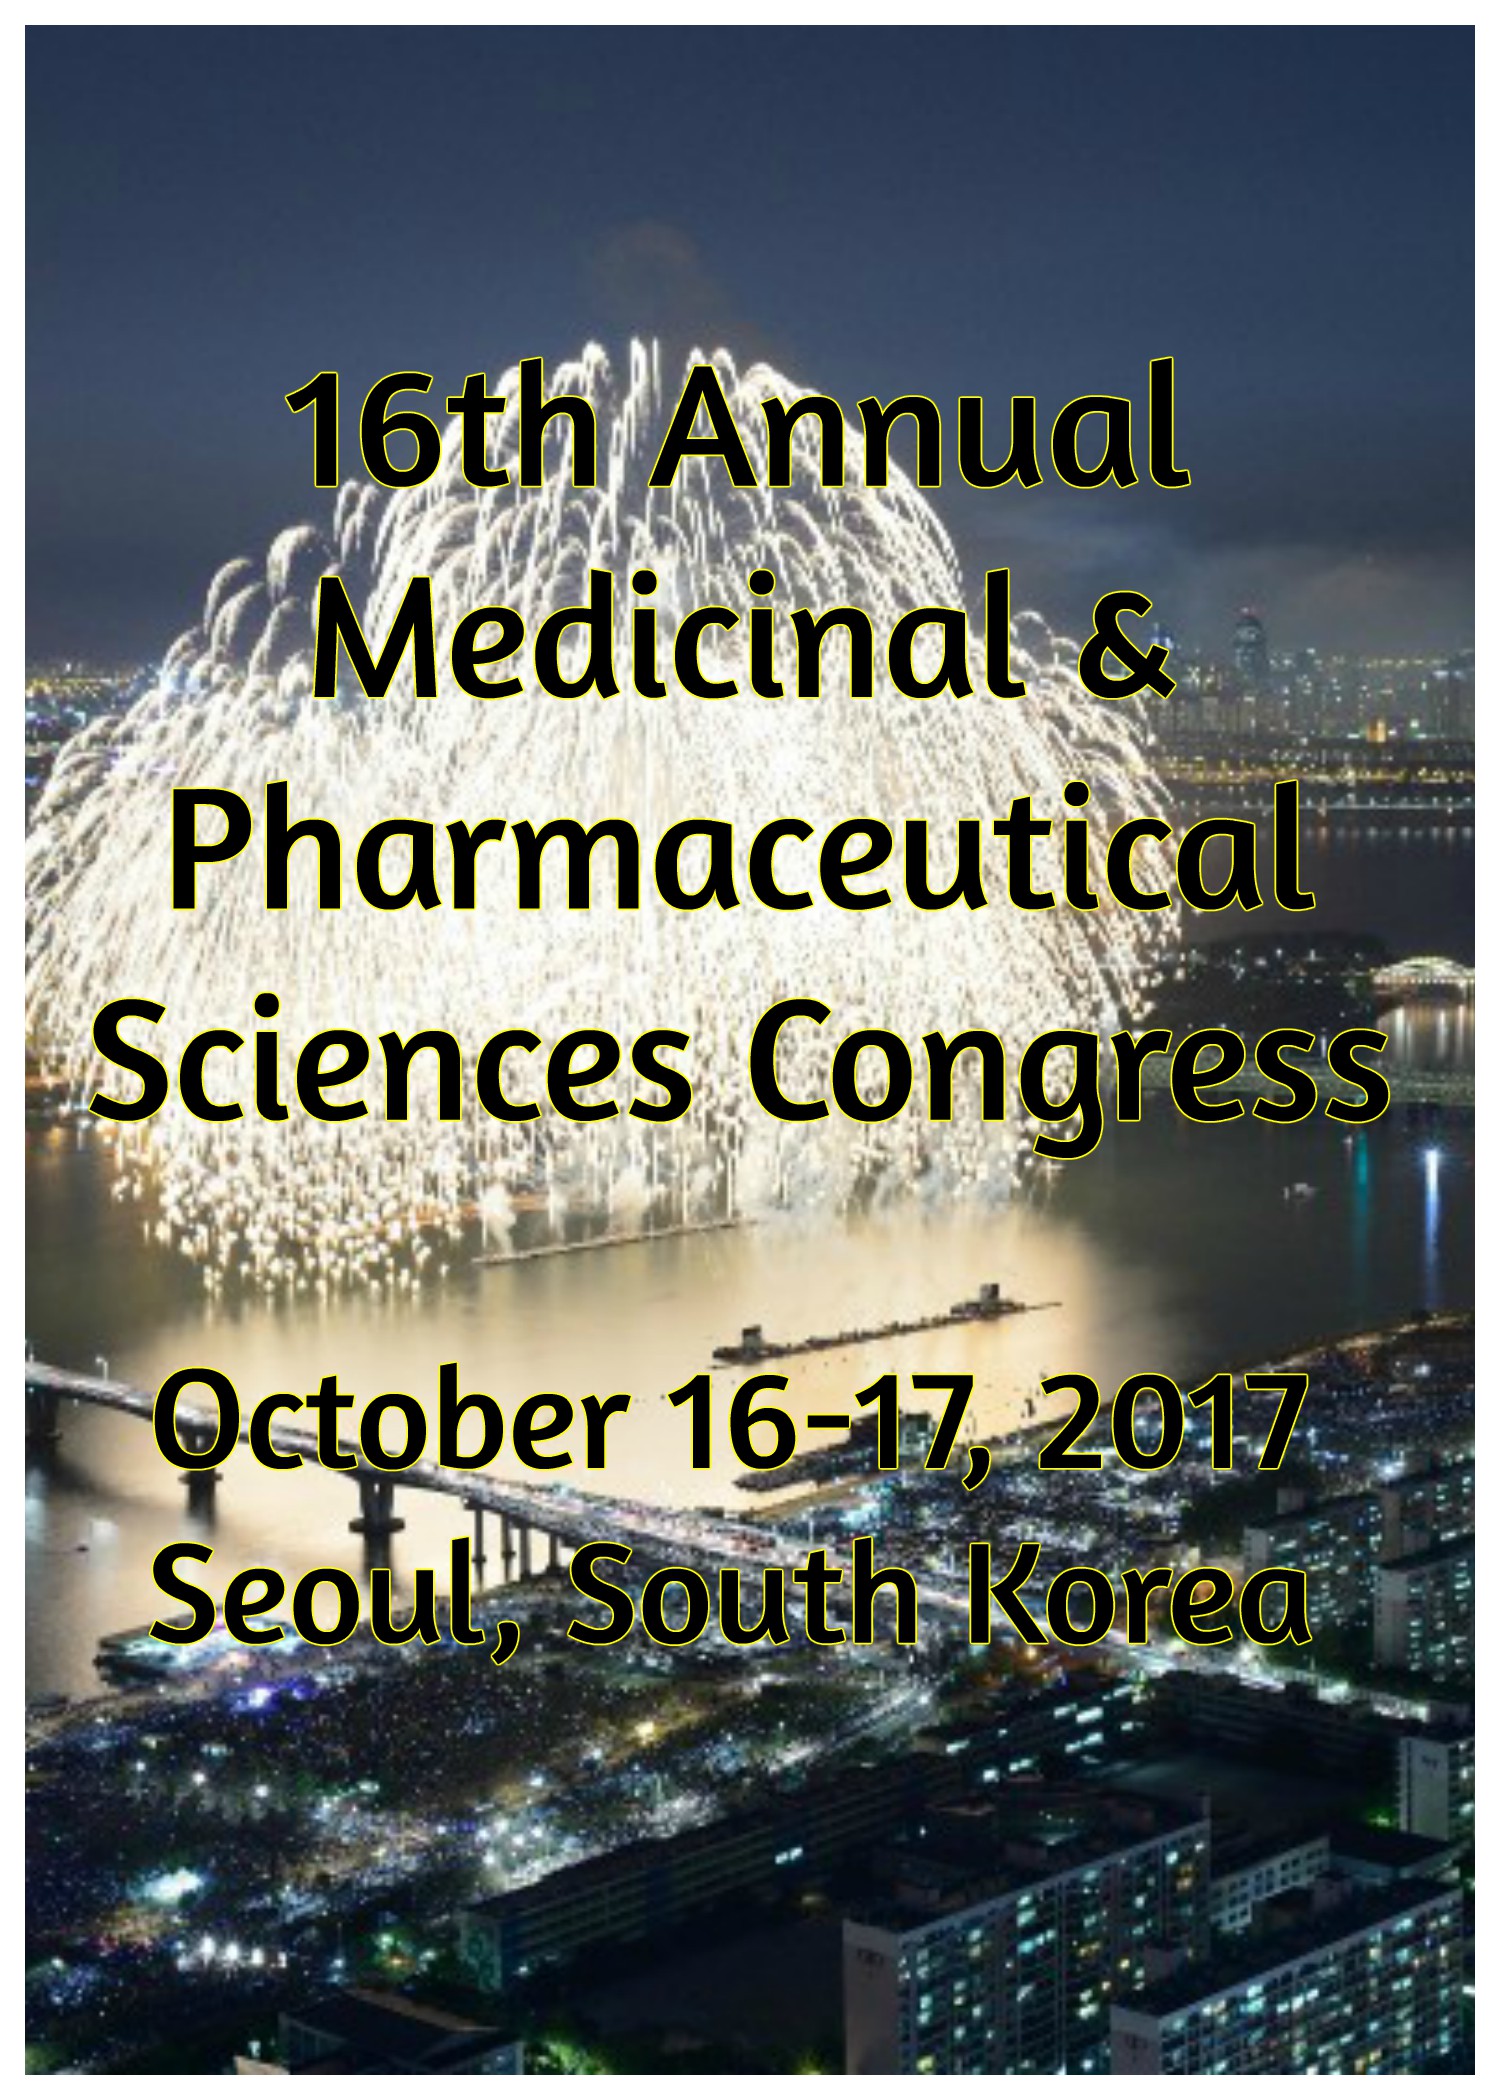 16th Annual Medicinal & Pharmaceutical Sciences Congress during October 16-17, 2017 Seoul, South Korea